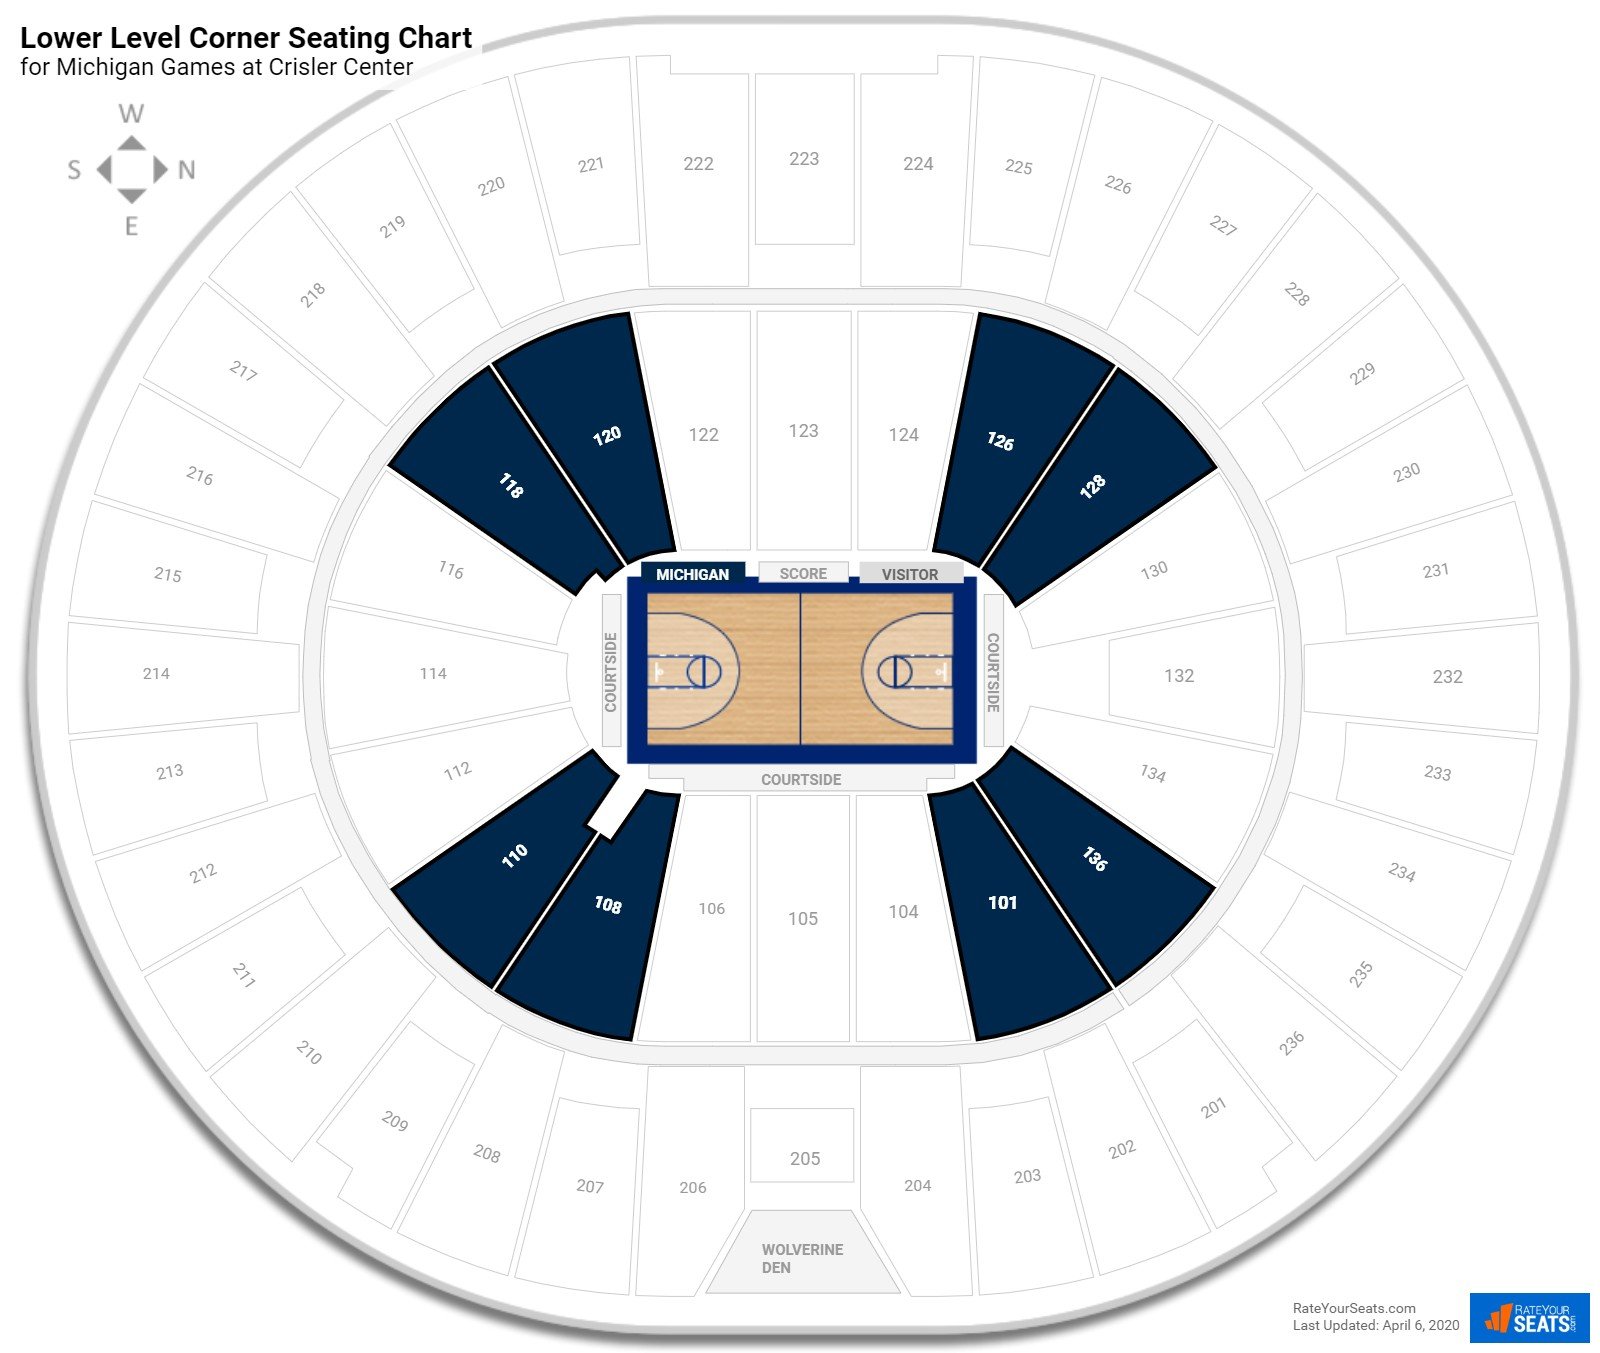 Crisler Arena Seating Chart Row Numbers